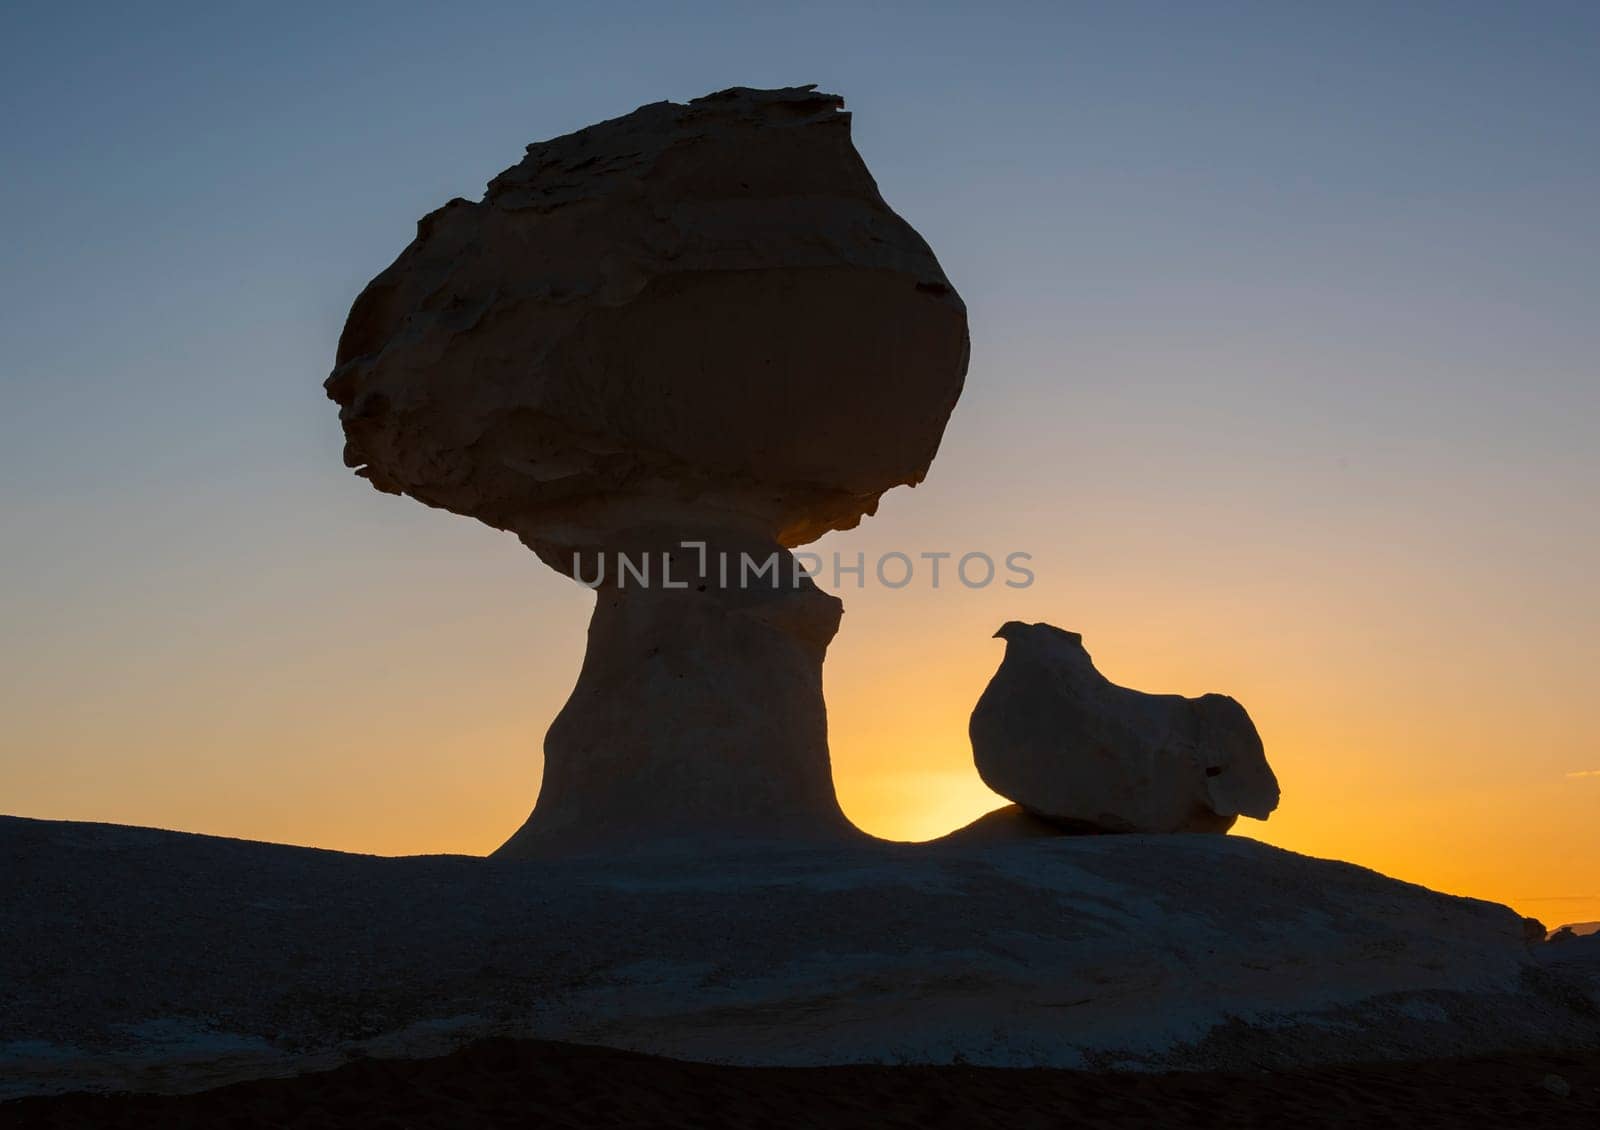 Barren desert landscape in hot climate with rock formation by paulvinten